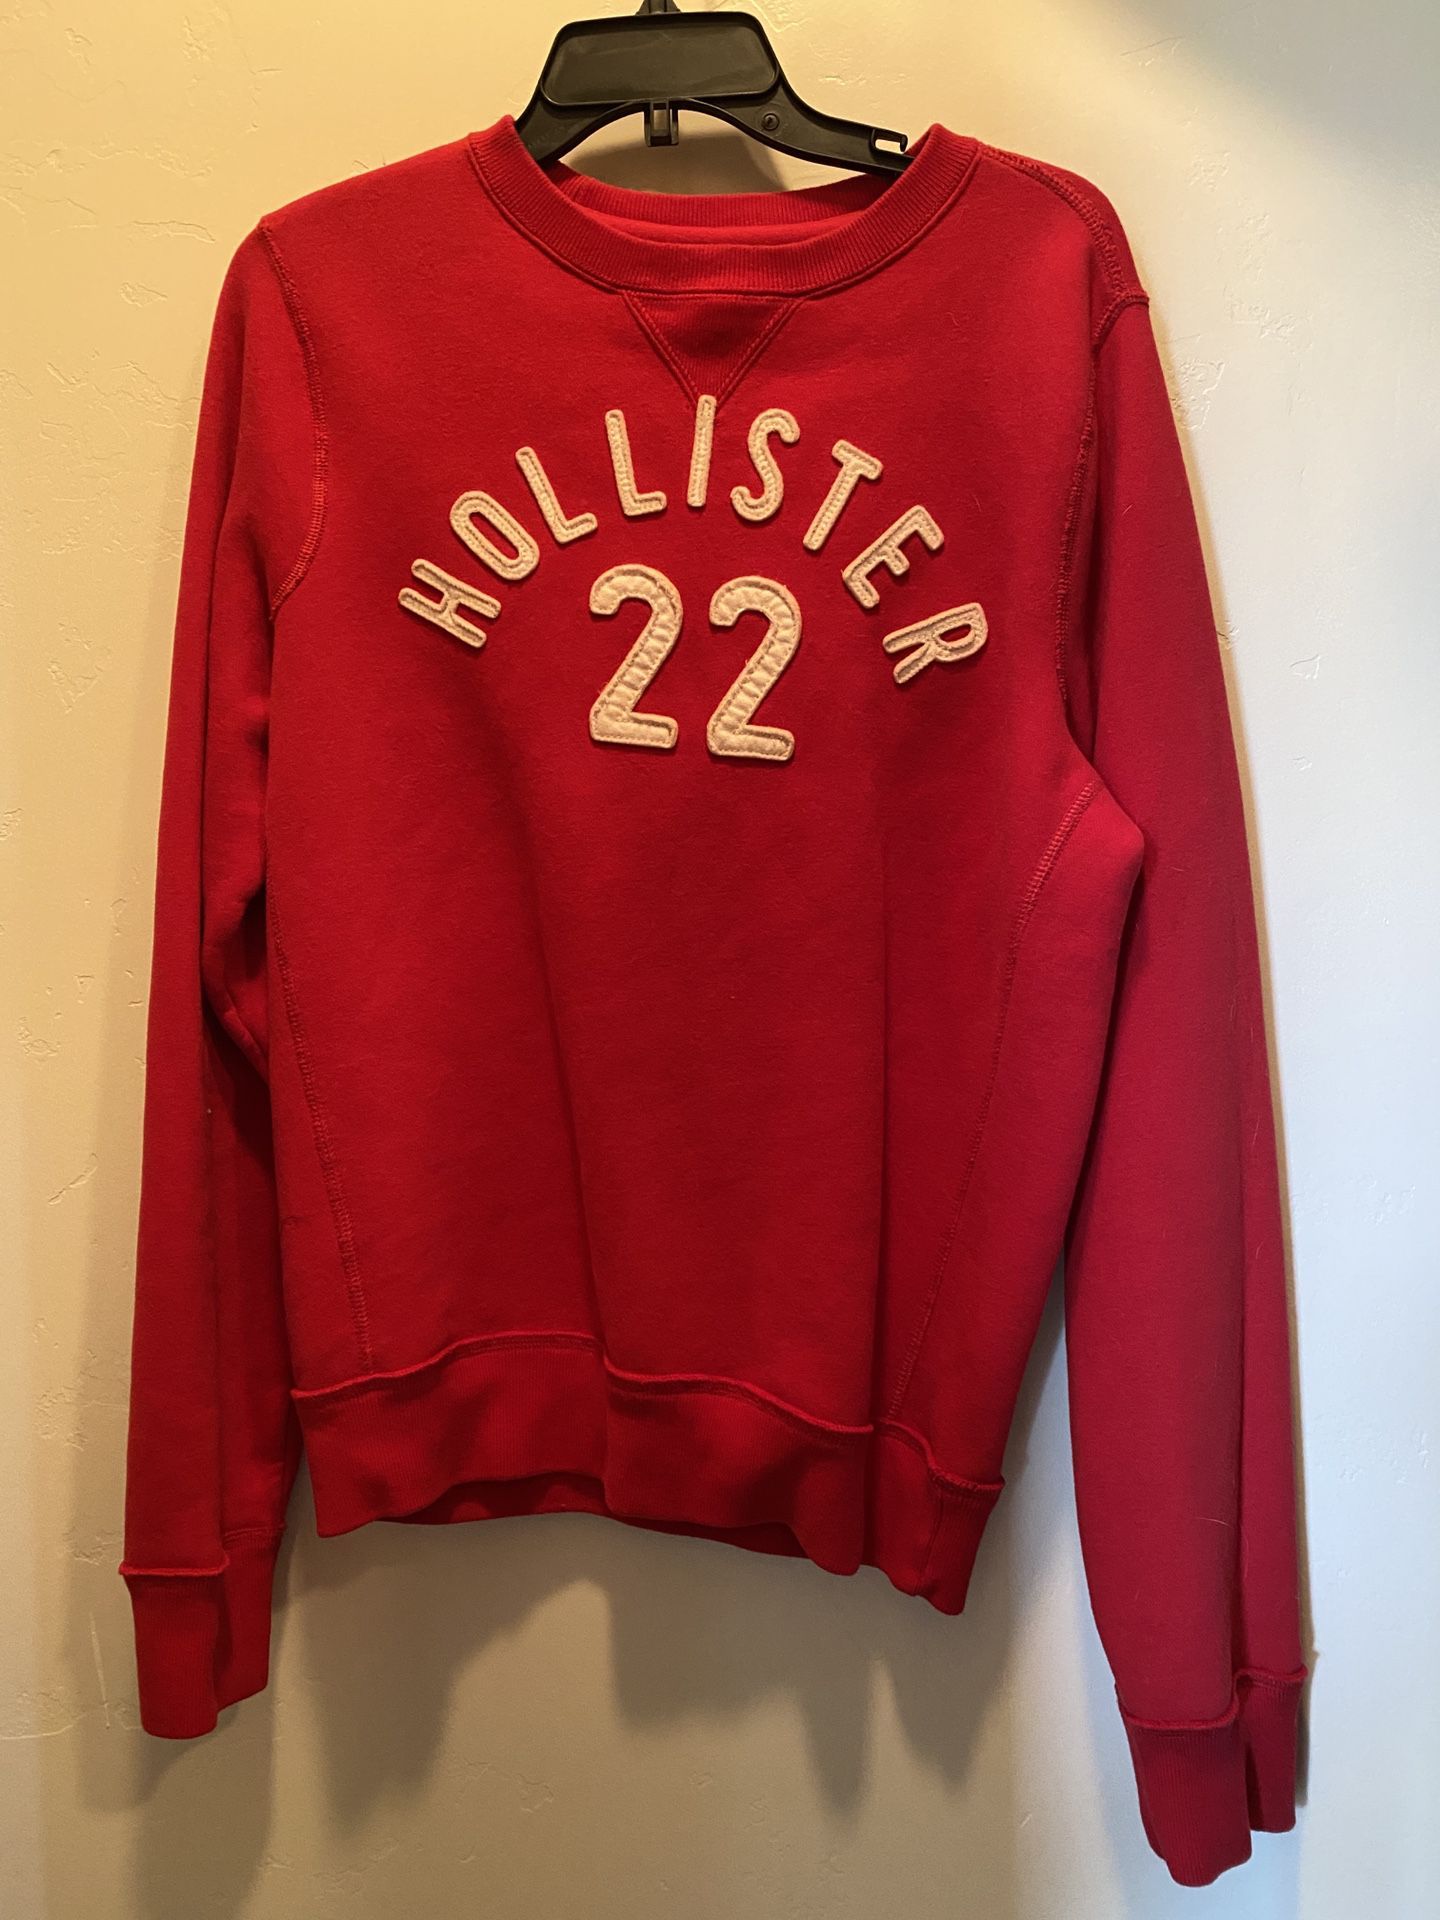 Hollister Sweatshirt- medium